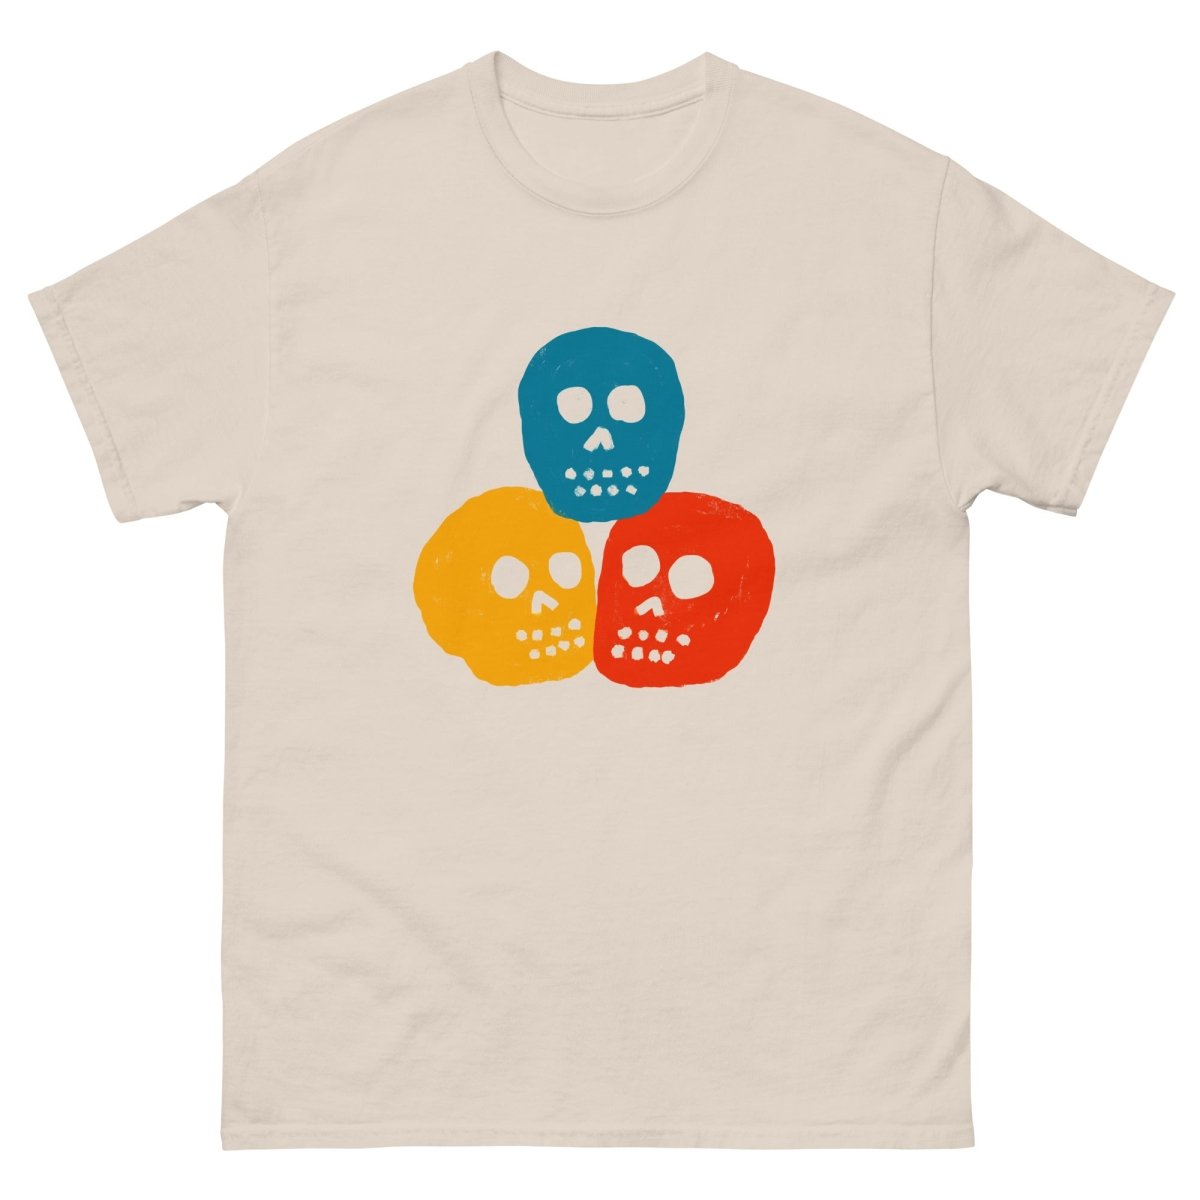 Three skulls t-shirt - T-Shirt - Pretty Bad Co.